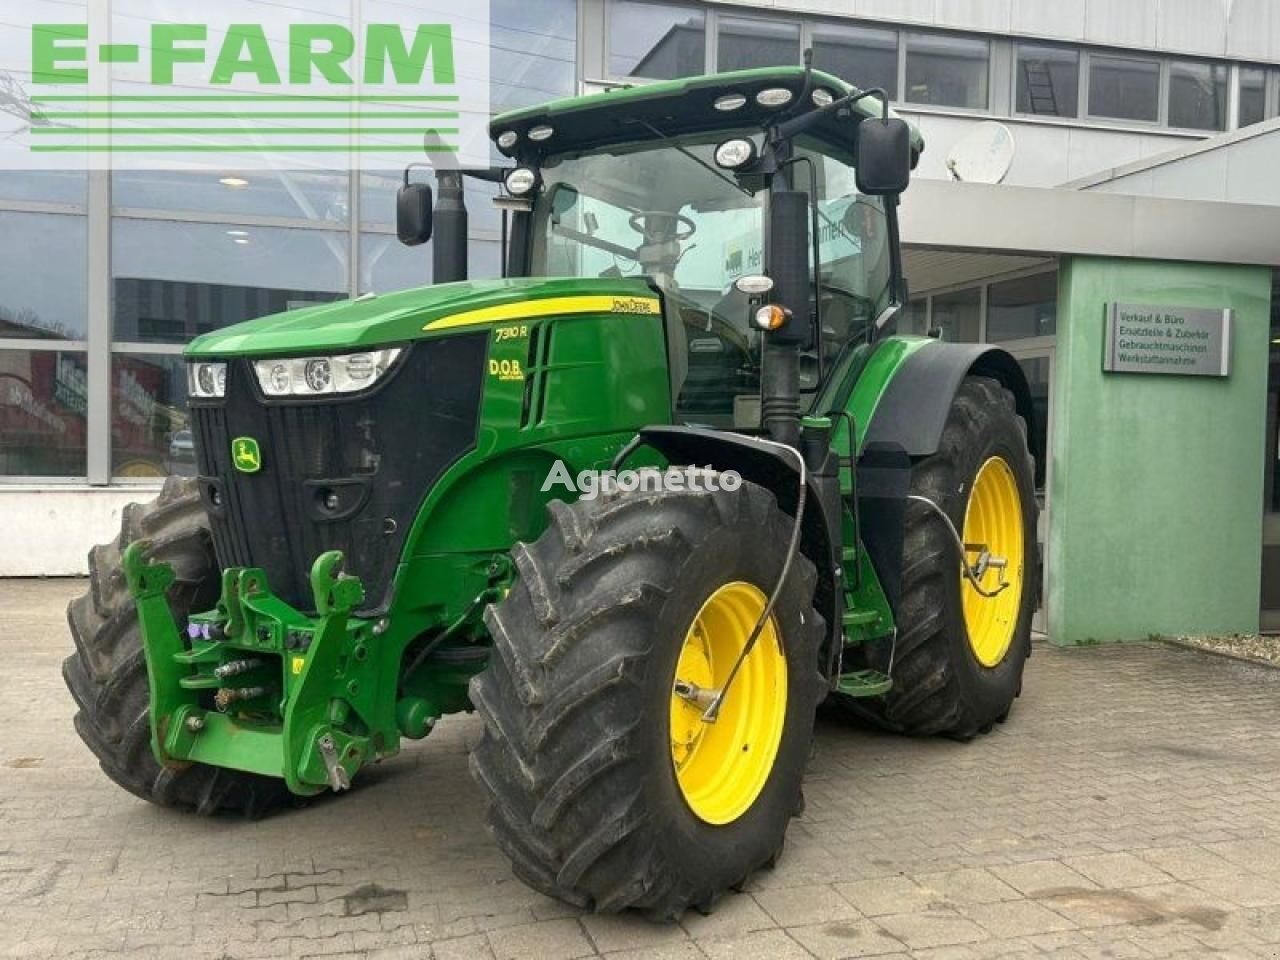 7310r 7310 r wheel tractor